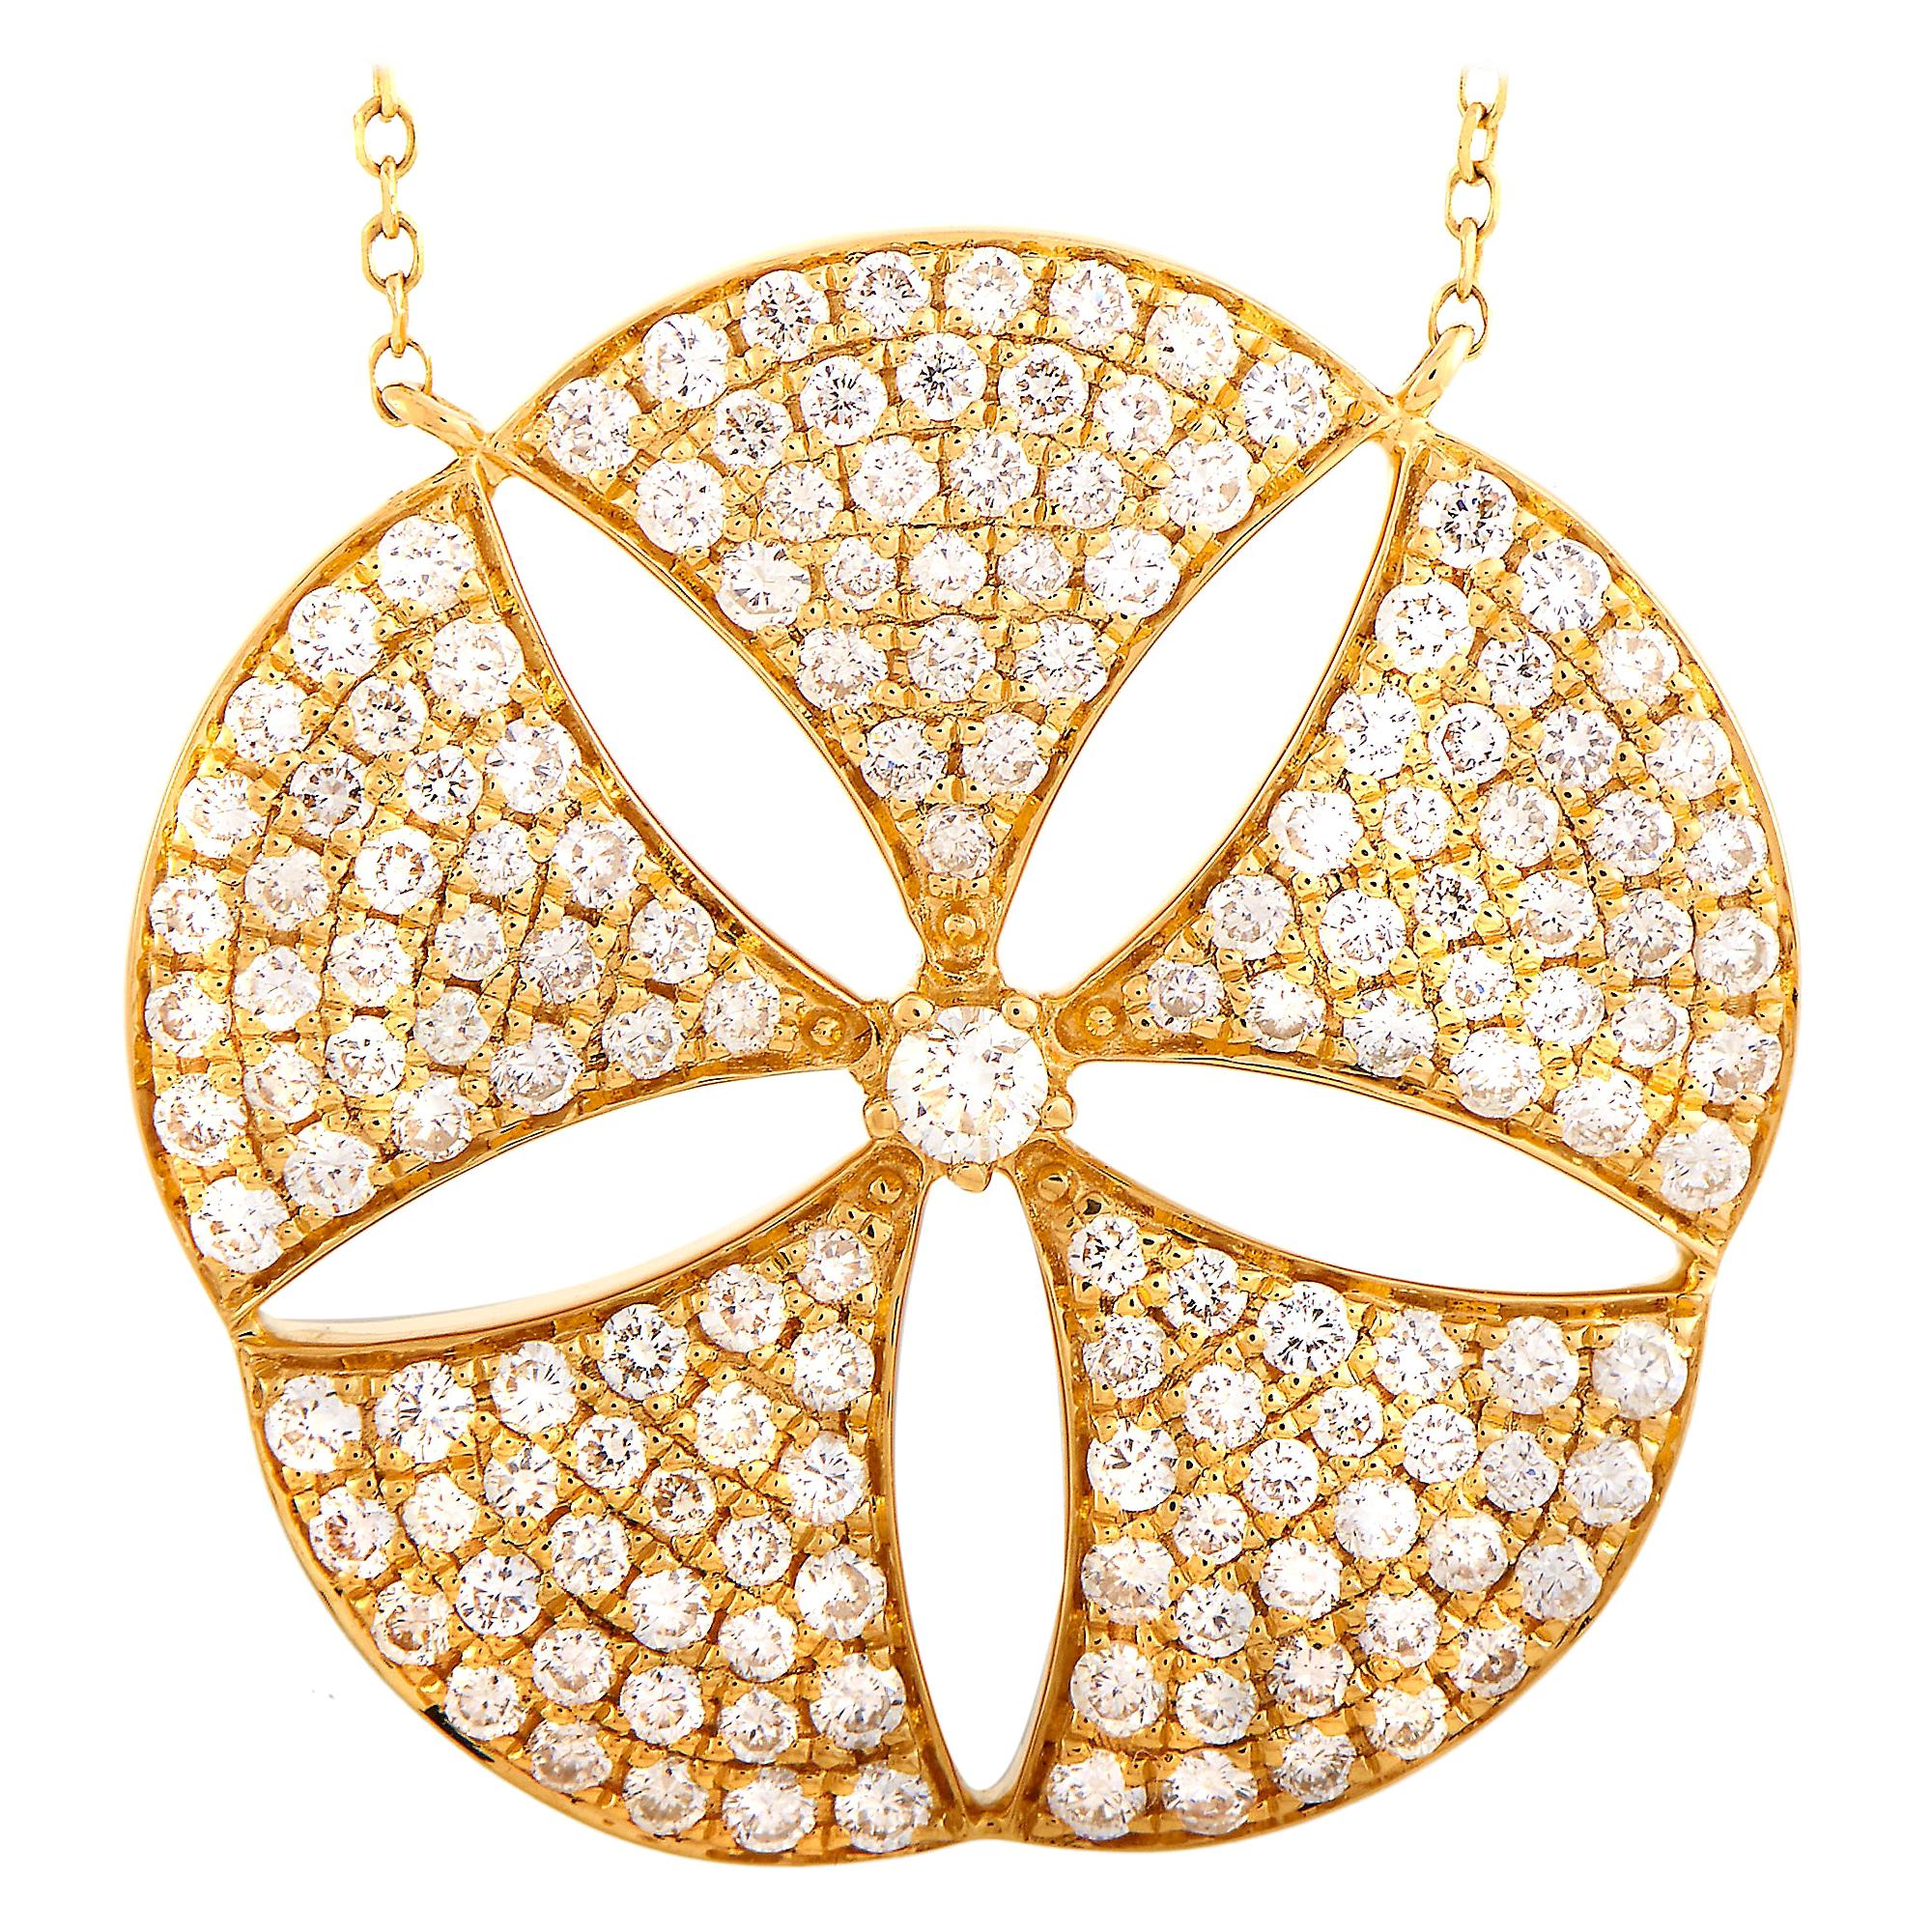 LB Exclusive 18 Karat Yellow Gold 1.30 Carat Diamond Pendant Necklace